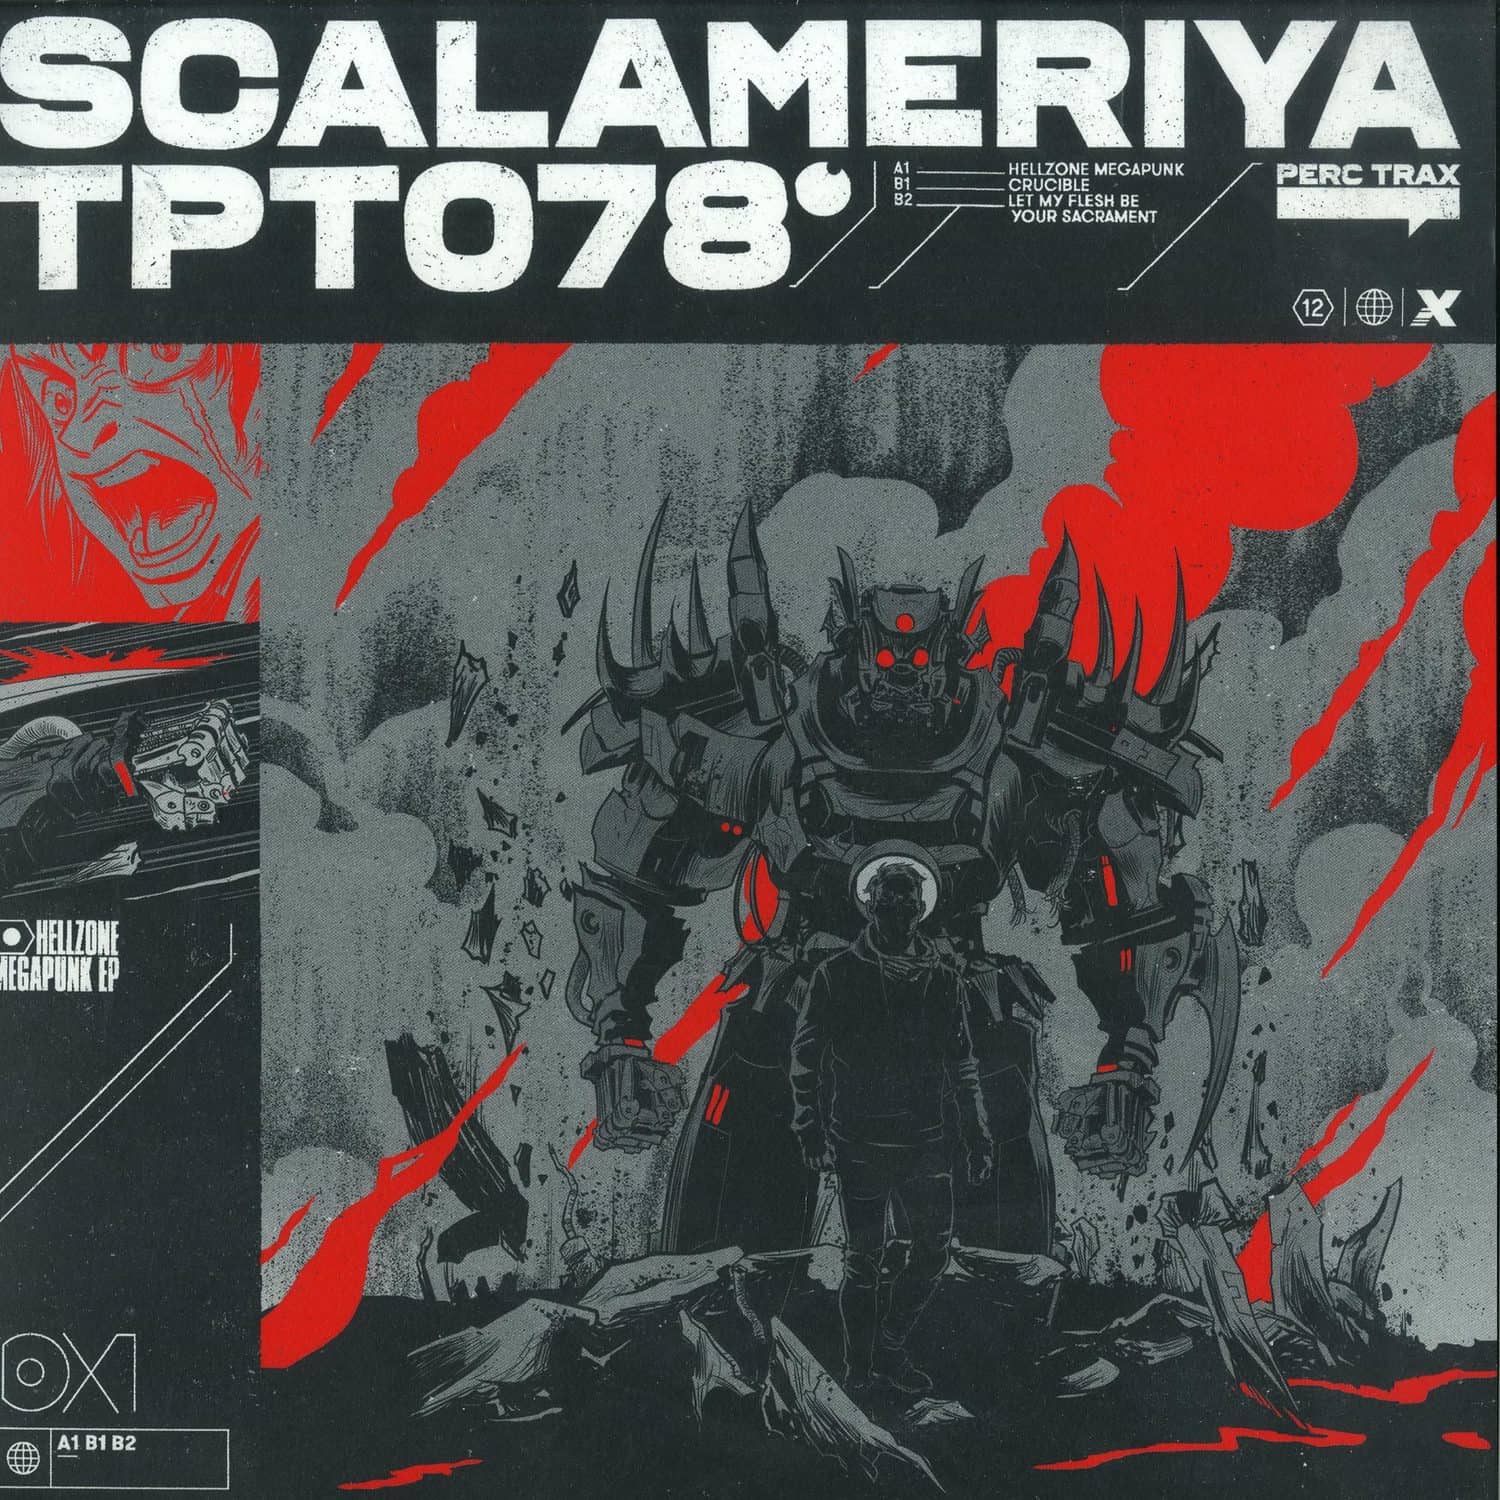 Scalameriya - HELLZONE MEGAPUNK EP